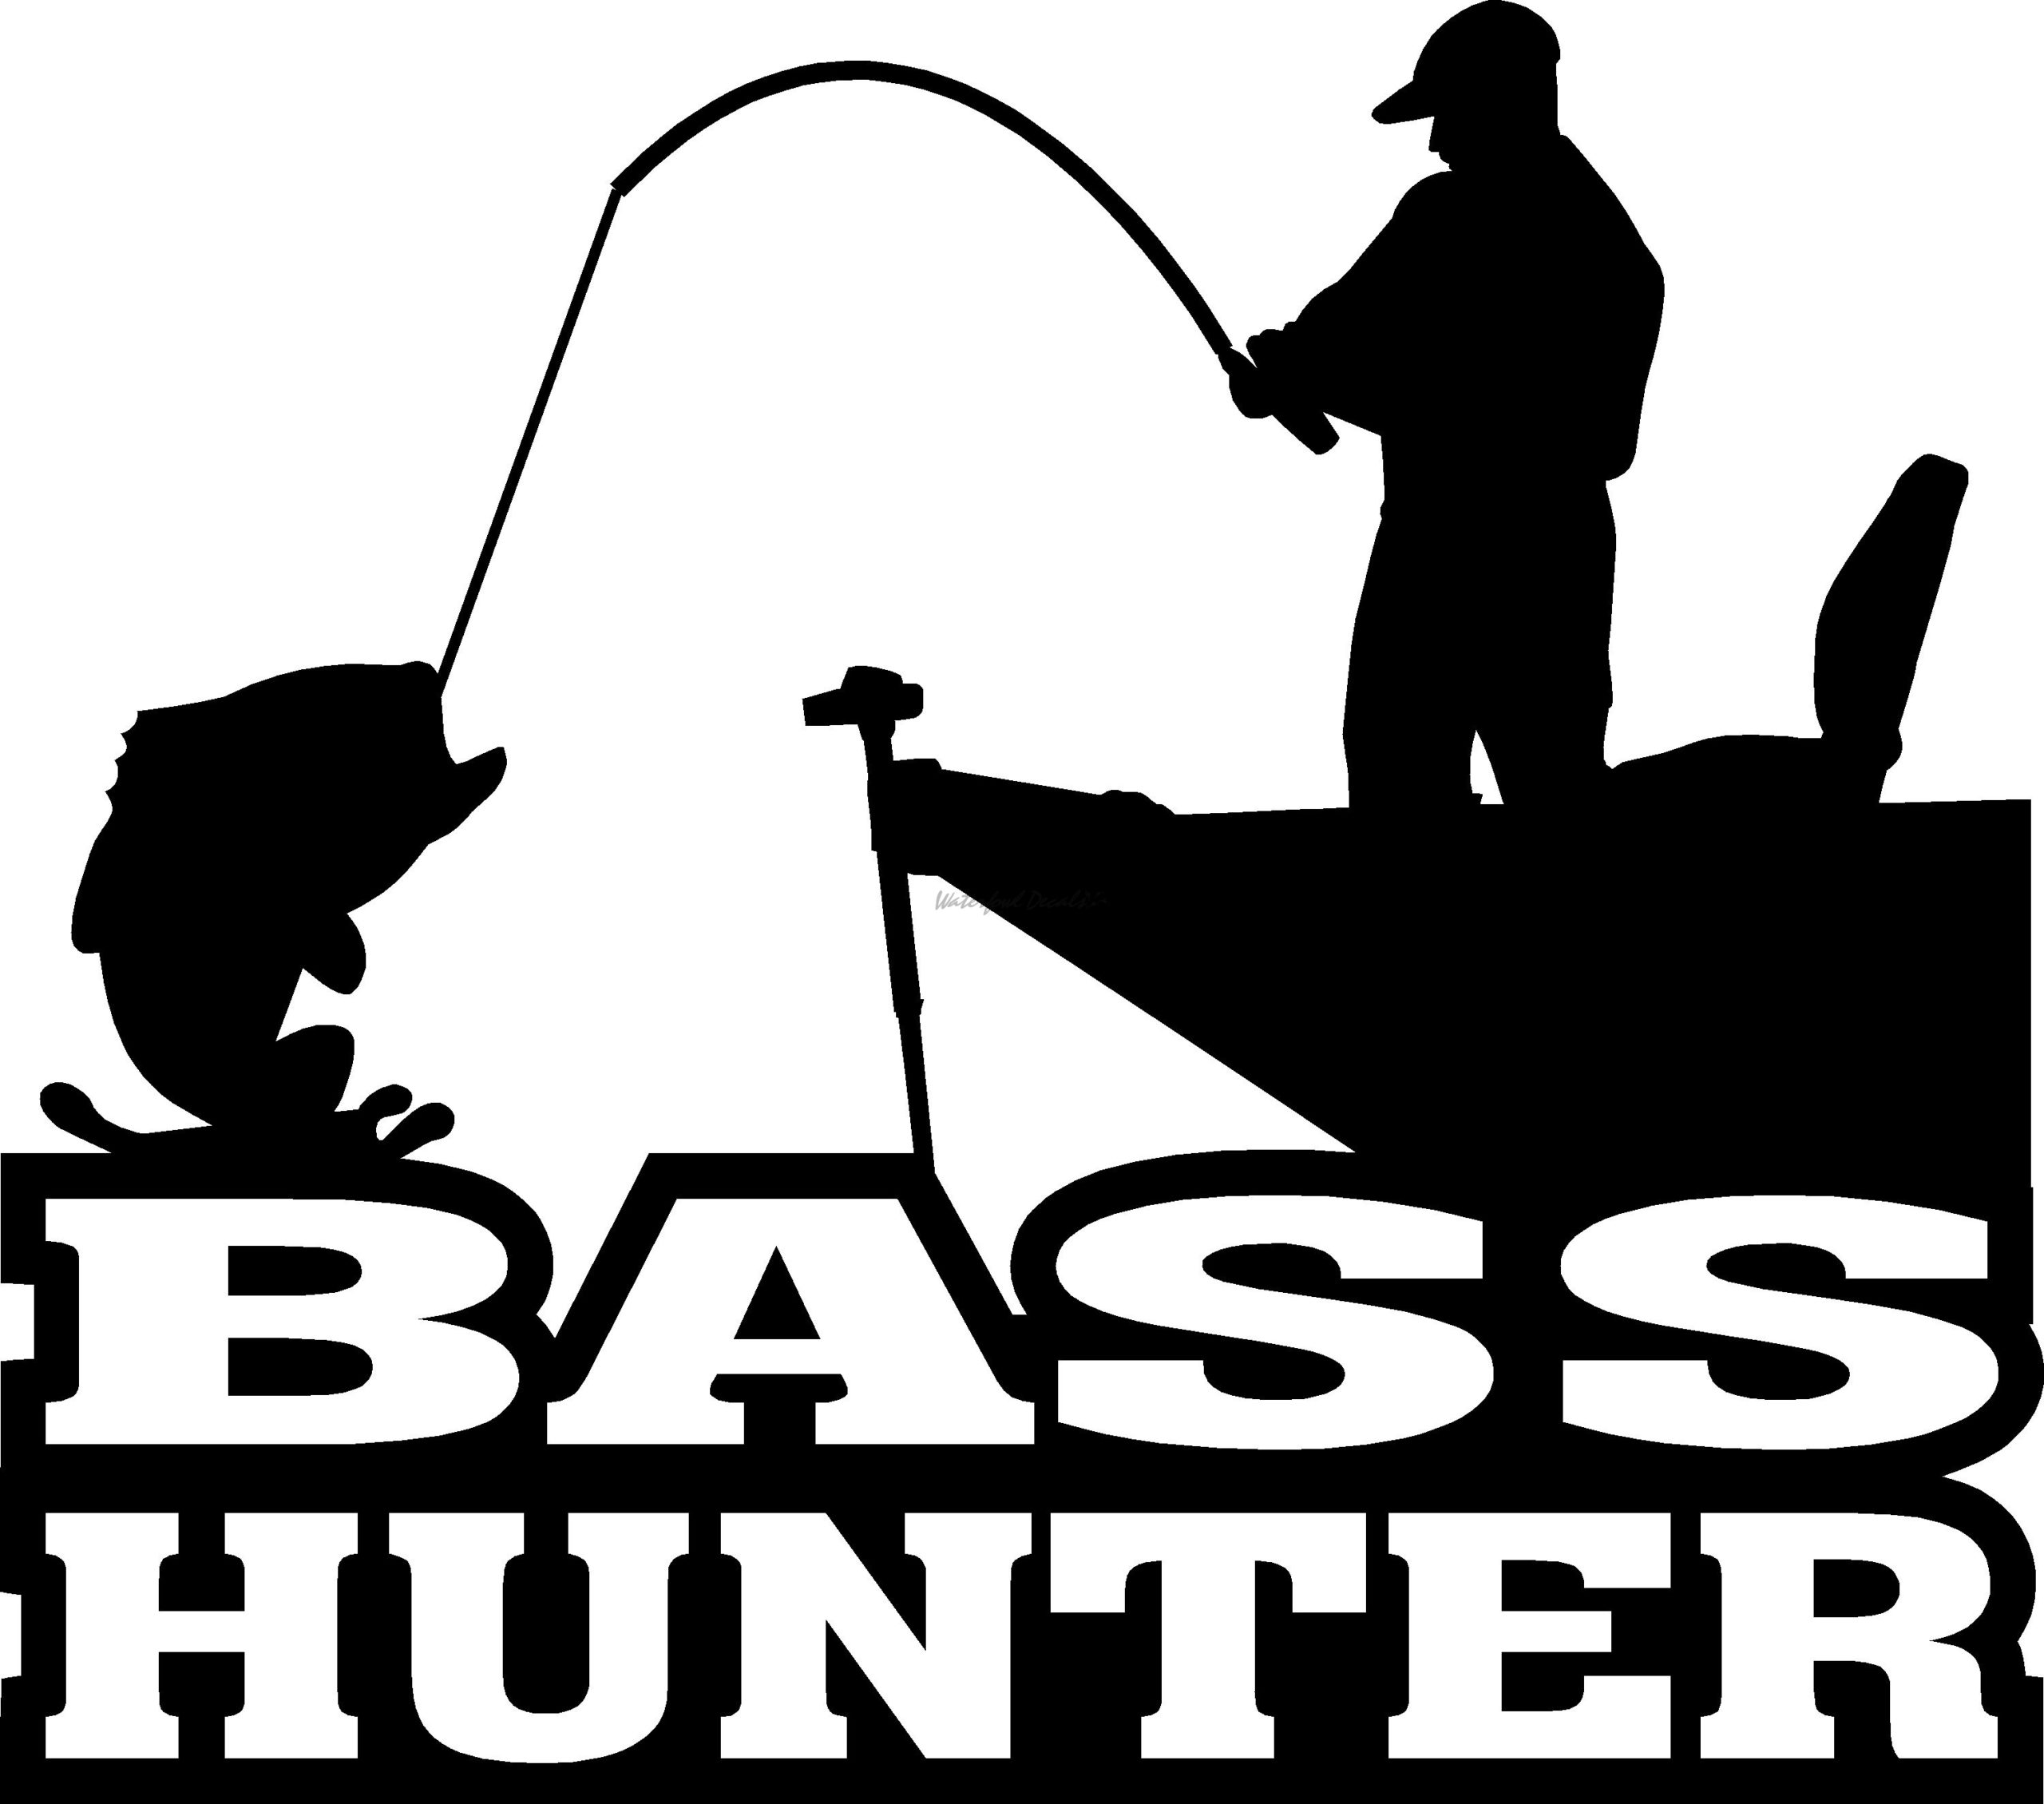 Bass Hunter - Bass Fisherman in Boat Decal - Bass Fishing Decal - 15018 | White